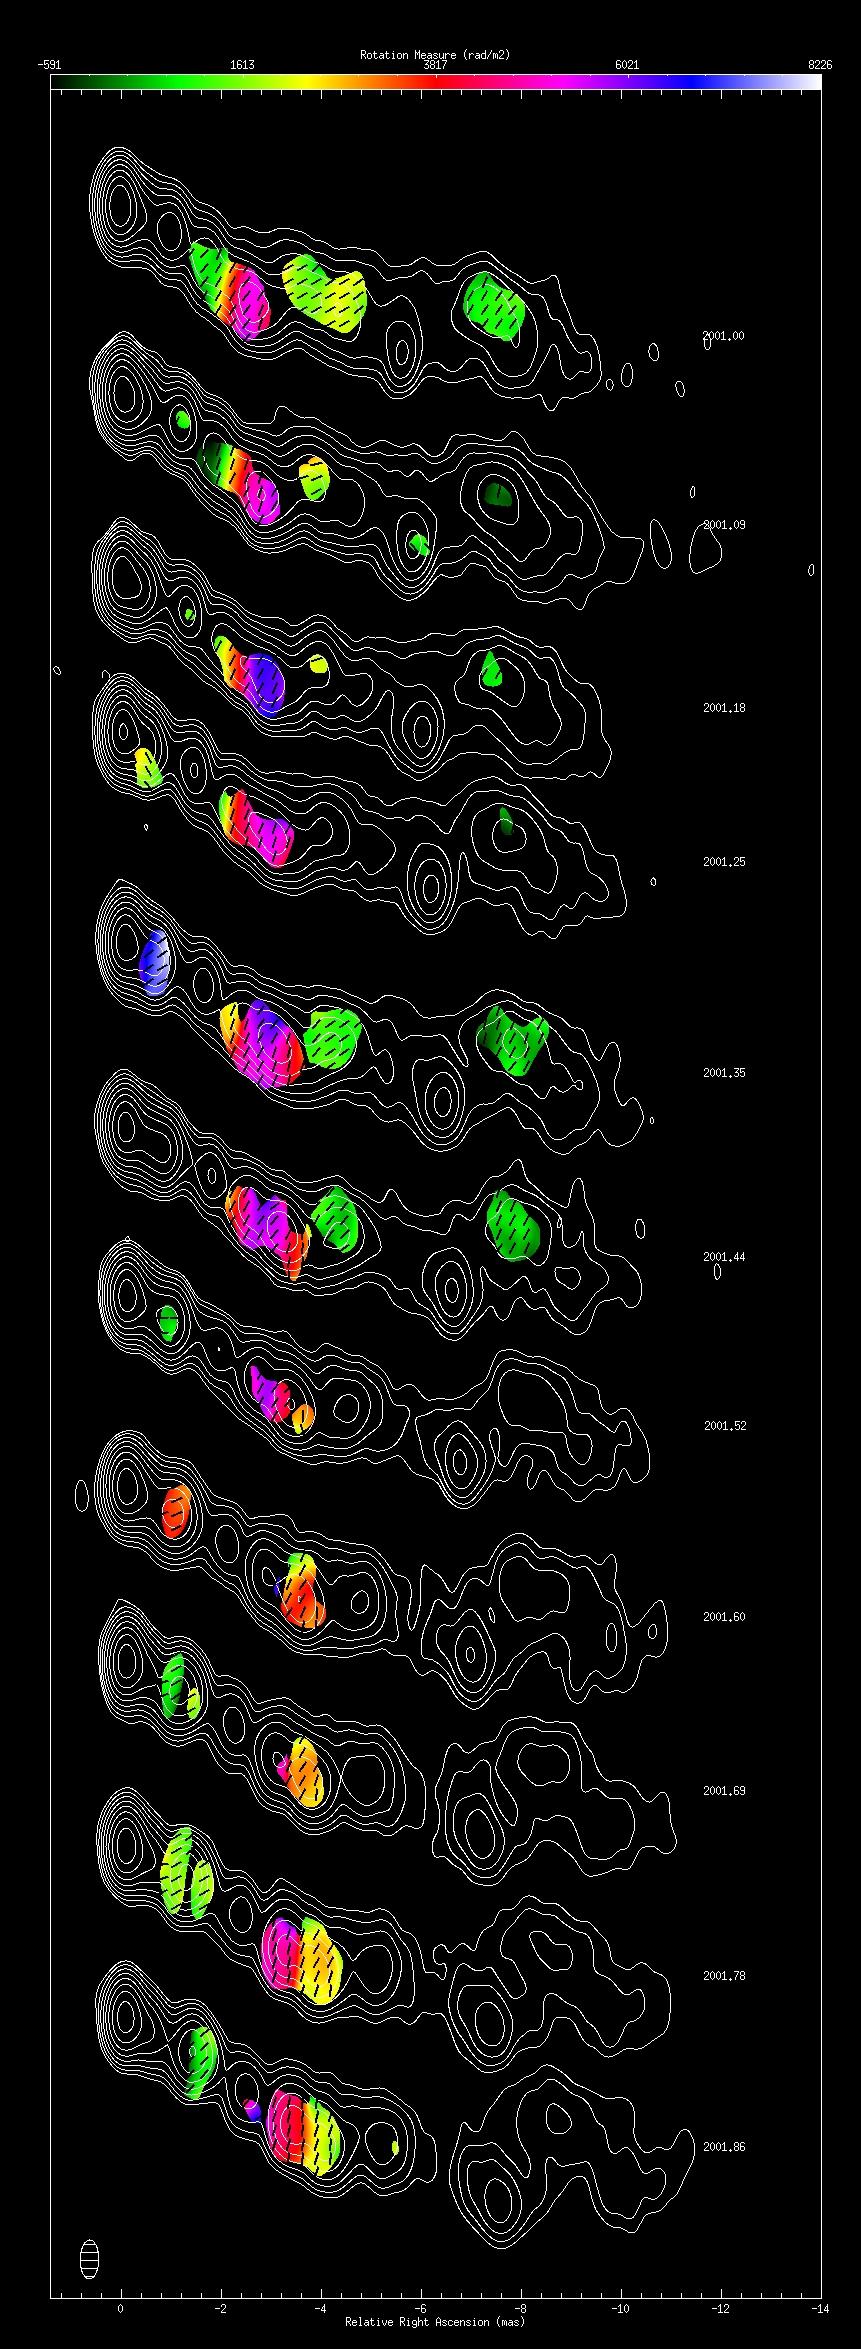 Time dependent Faraday rotation VLBI imaging of AGN relativistic jets Rota%on measure across